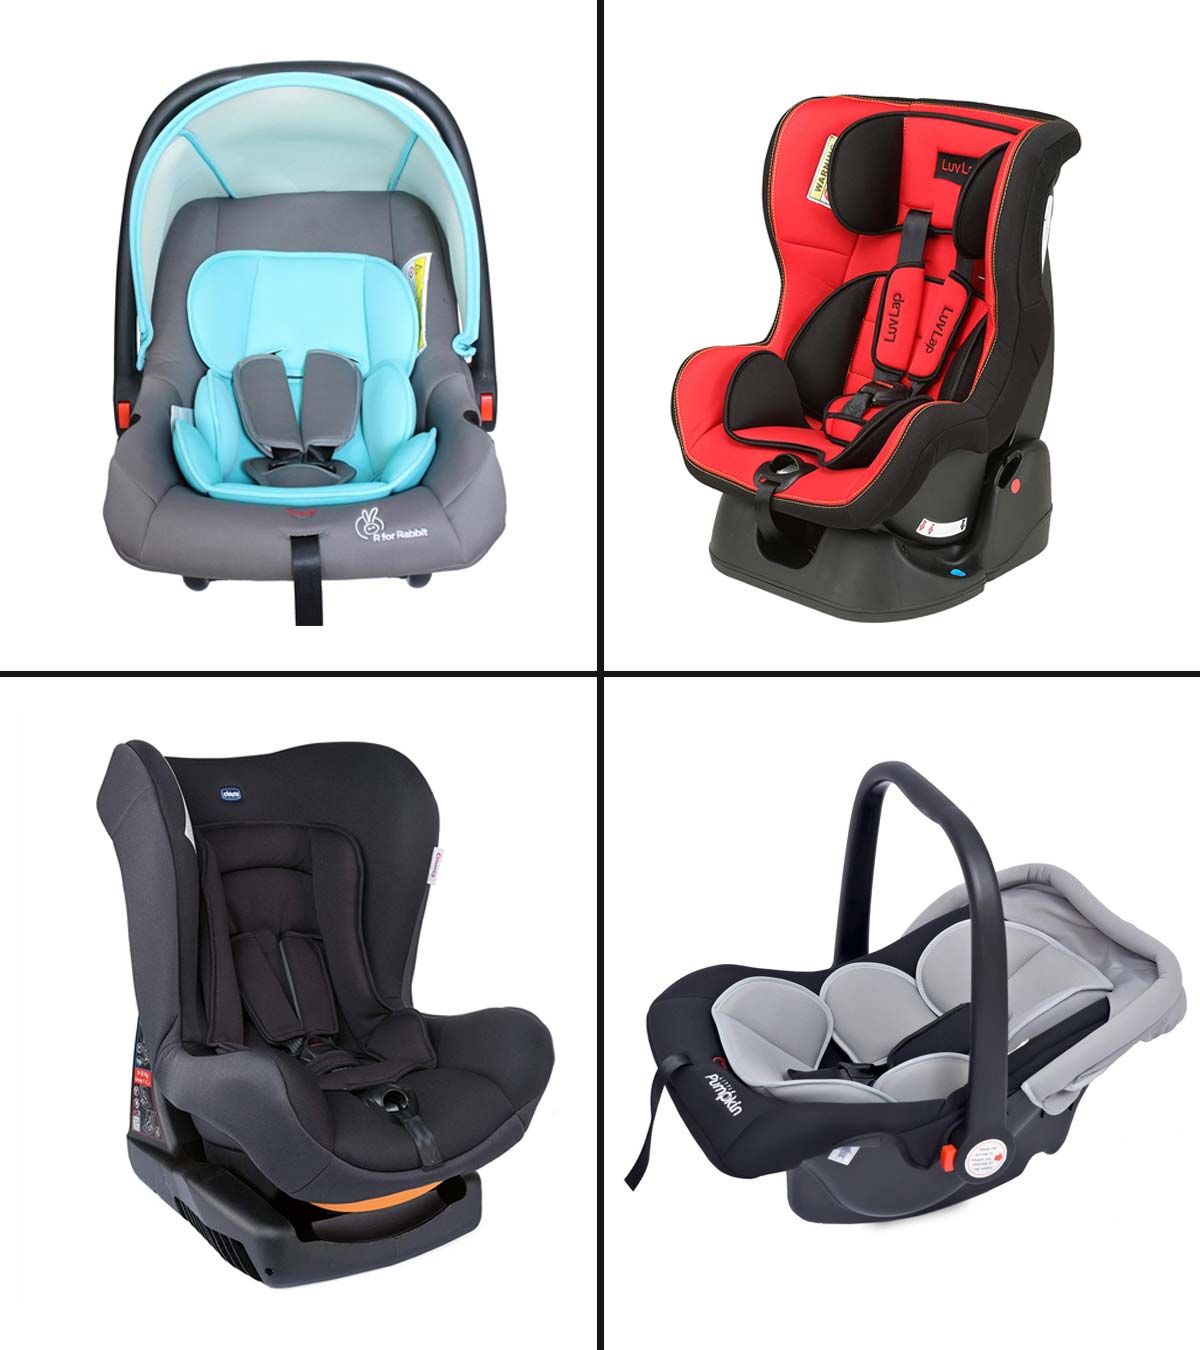 https://www.momjunction.com/wp-content/uploads/2020/07/11-Best-Baby-Car-Seats-In-India-In-2020.jpg